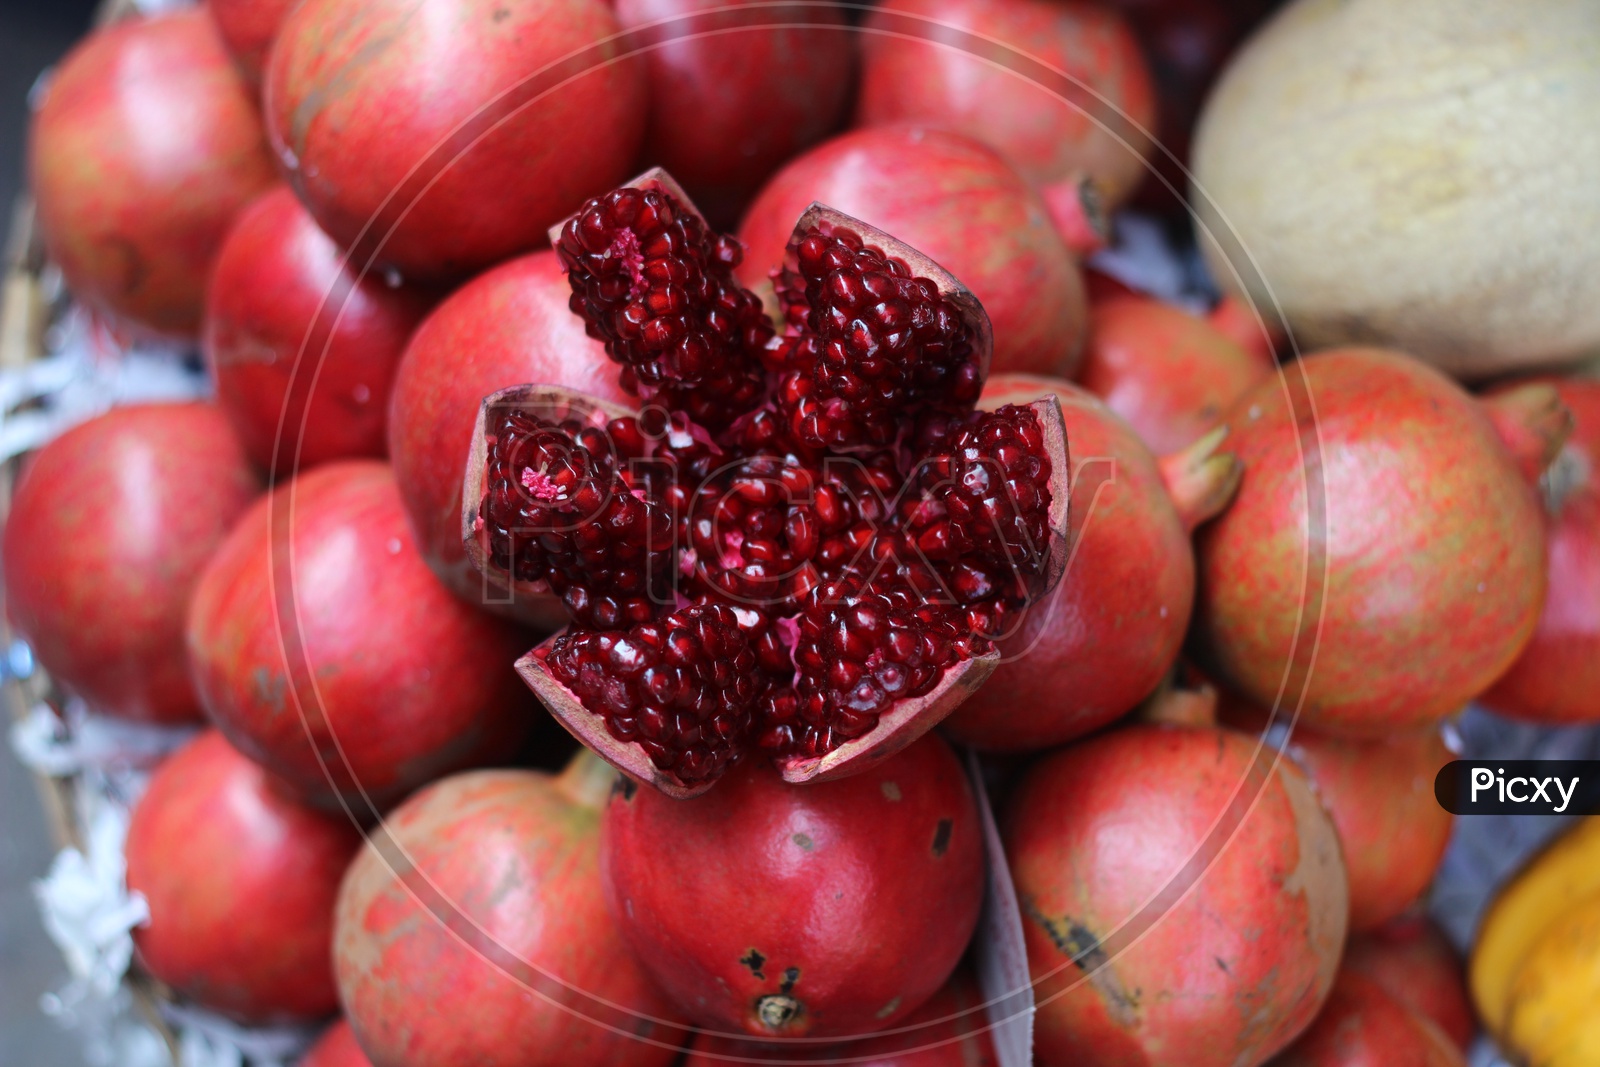 Photograph of opened pomegranate fruit